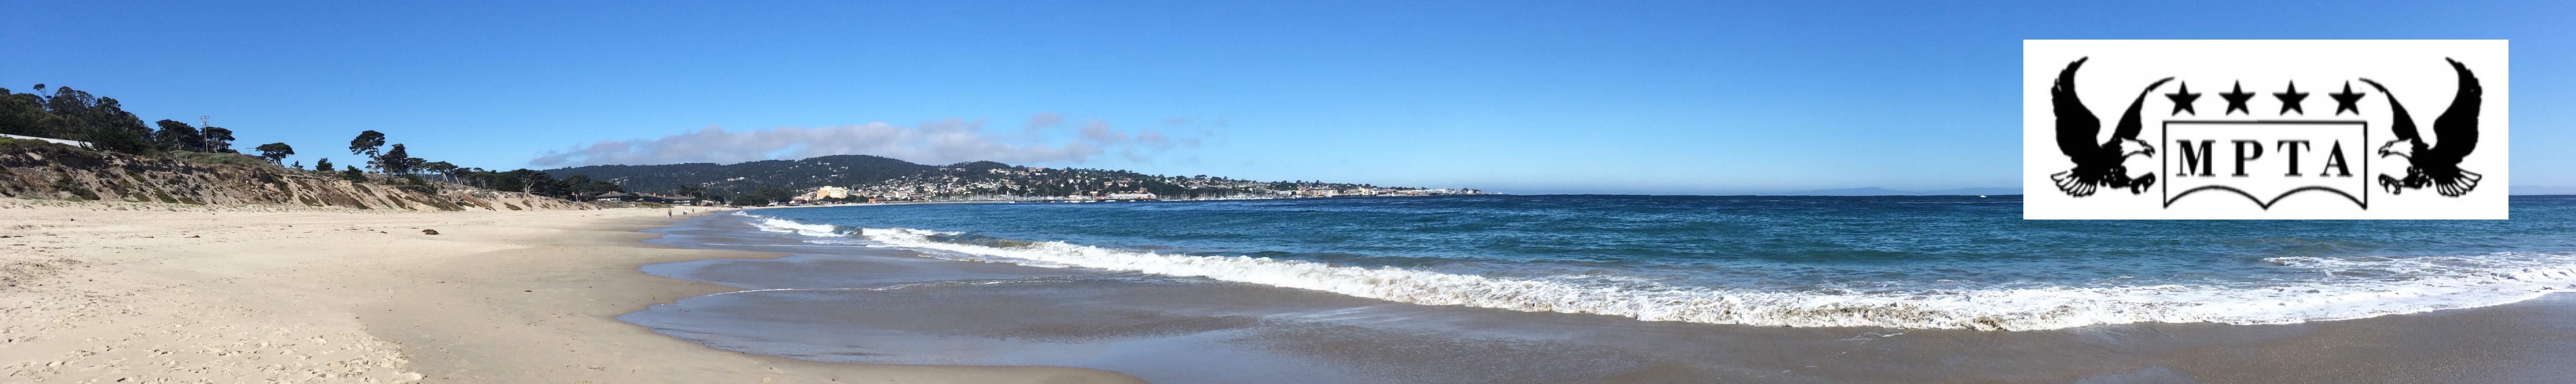 Monterey Peninsula Taxpayers Association Fruitlessly Seeks Enforcement of Park District Campaign Violation